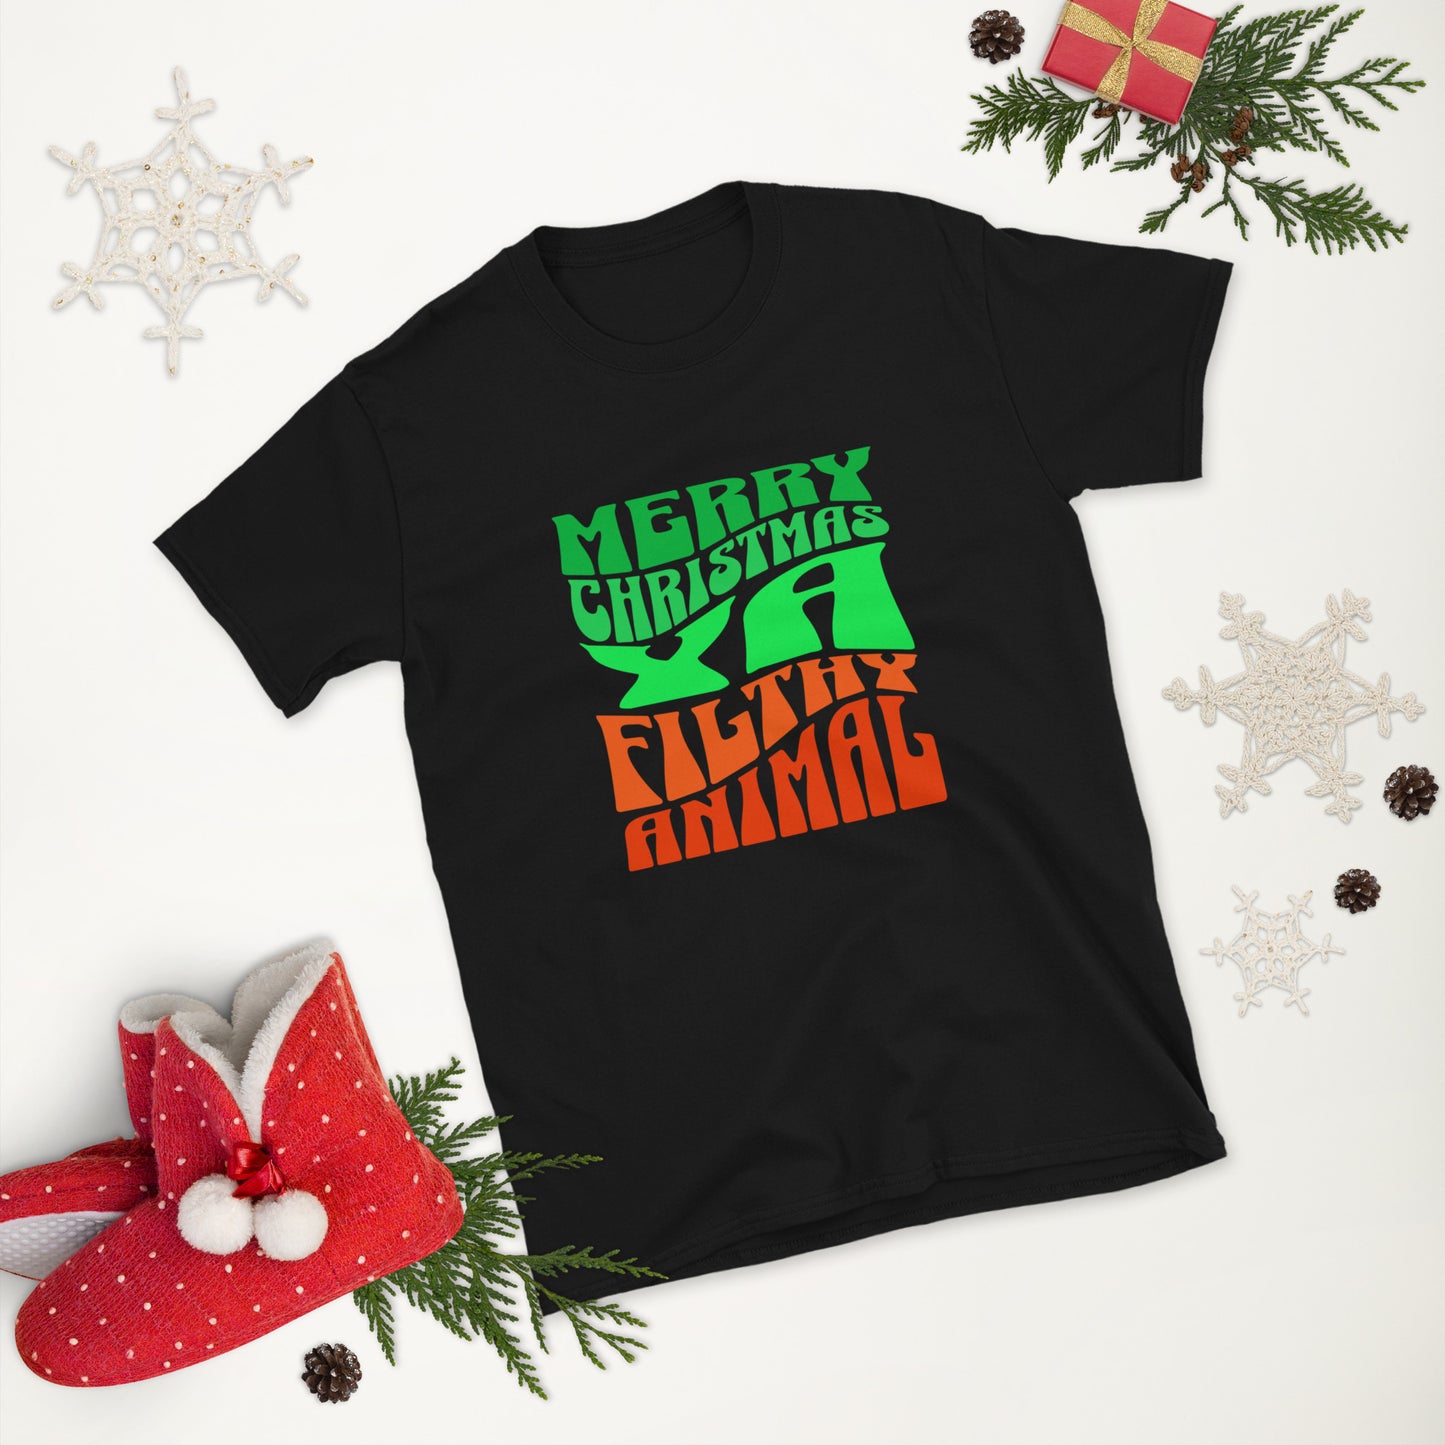 Xmas T-Shirt: Merry Christmas Ya Filthy Animal (Unisex)